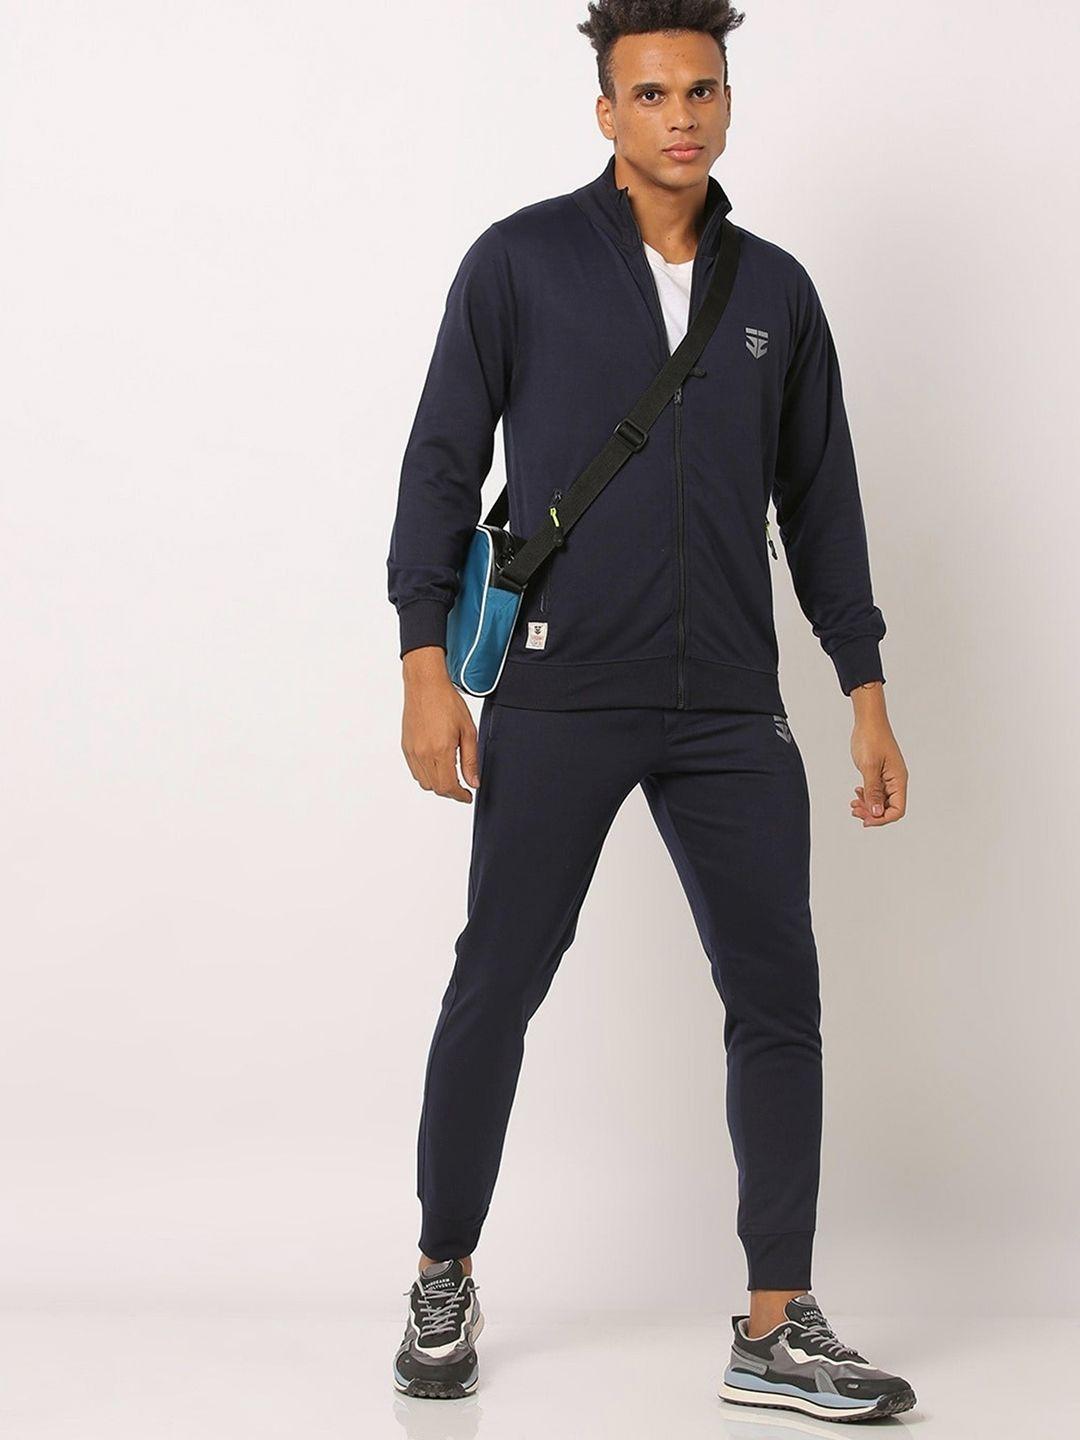 sports52 wear men navy blue comfort fit solid tracksuit